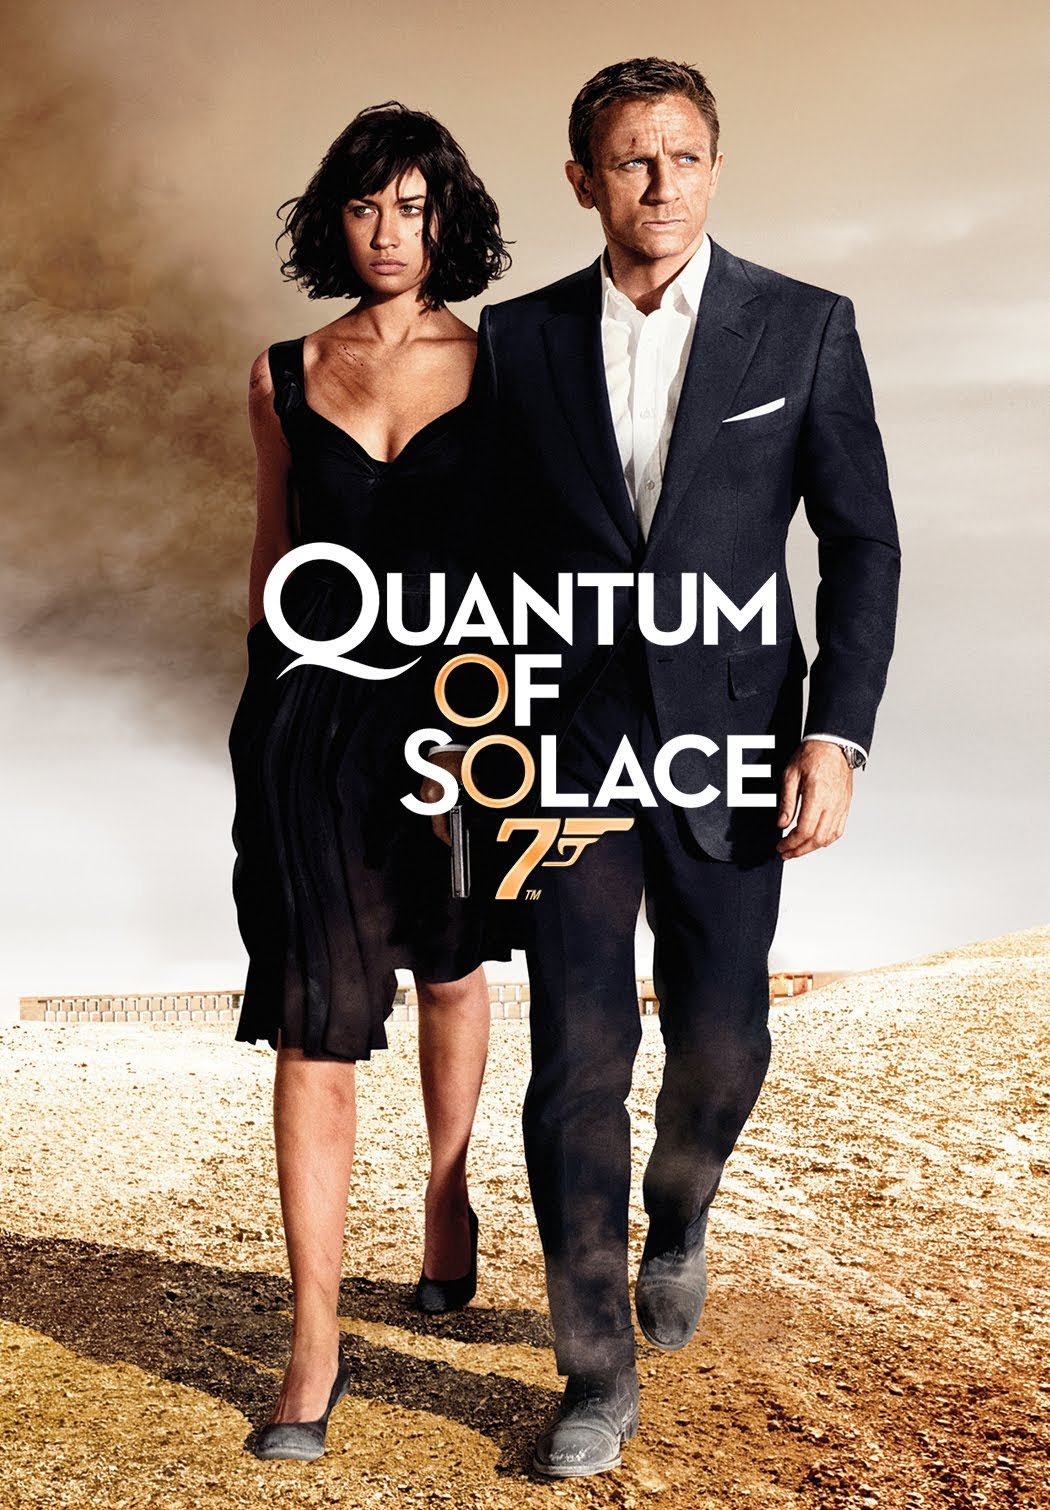 007 – Quantum of Solace [HD] (2008)